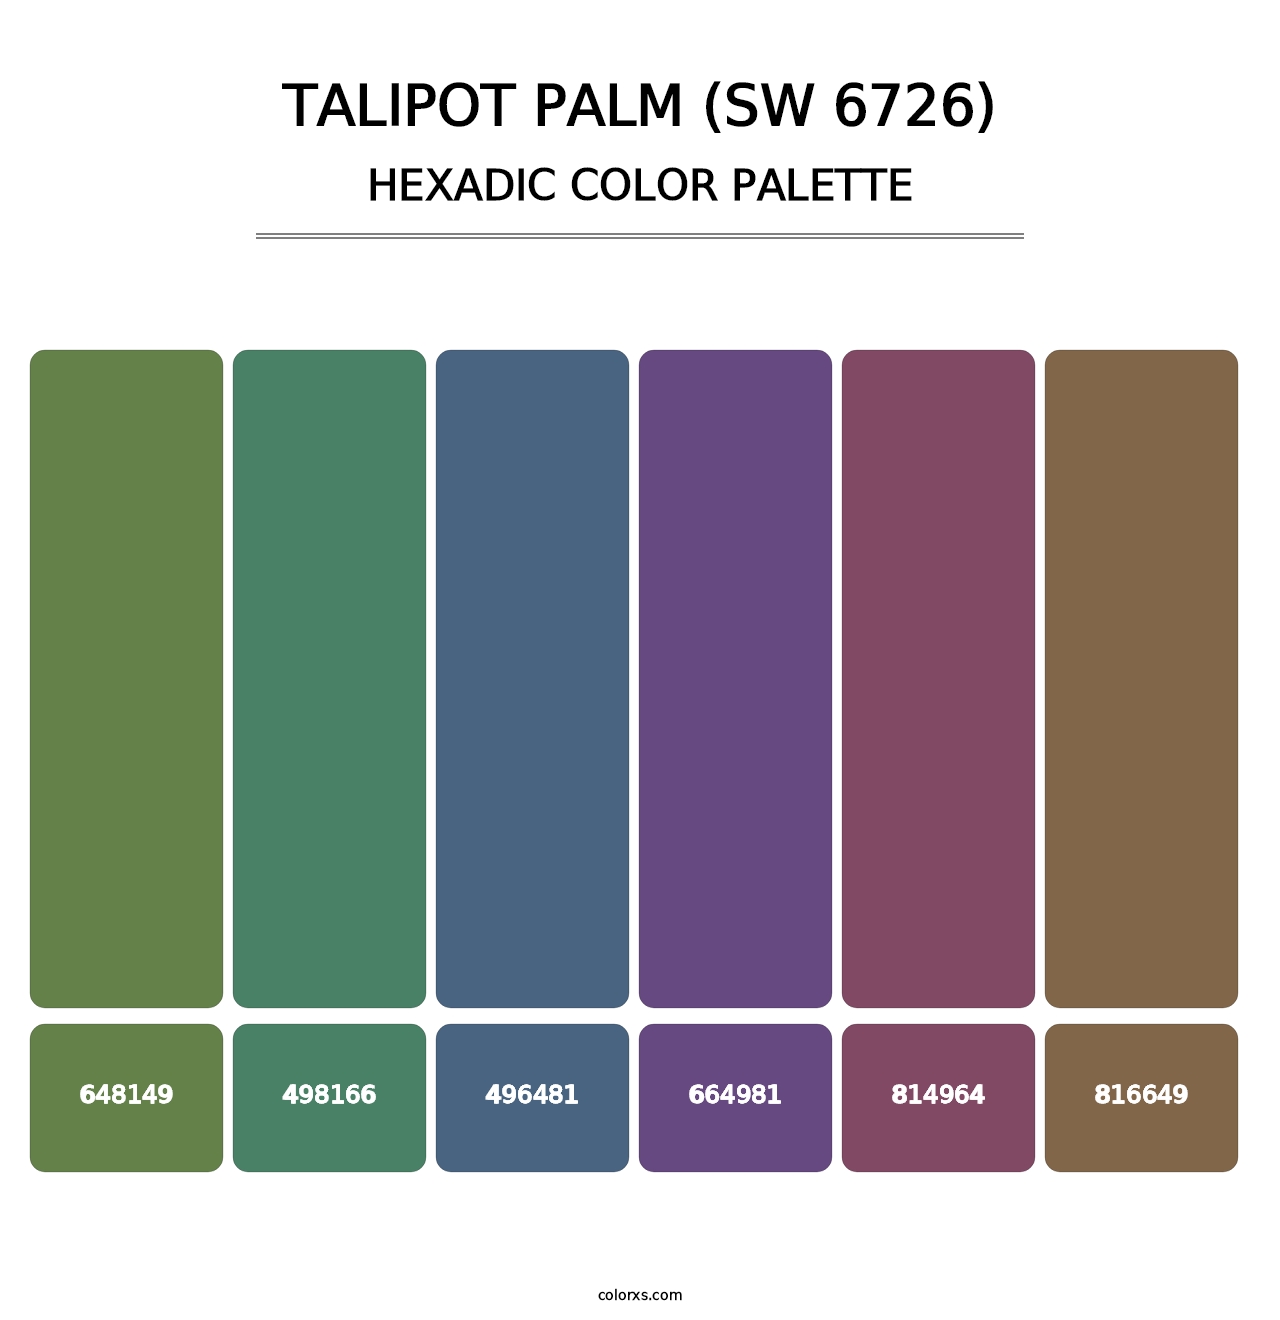 Talipot Palm (SW 6726) - Hexadic Color Palette